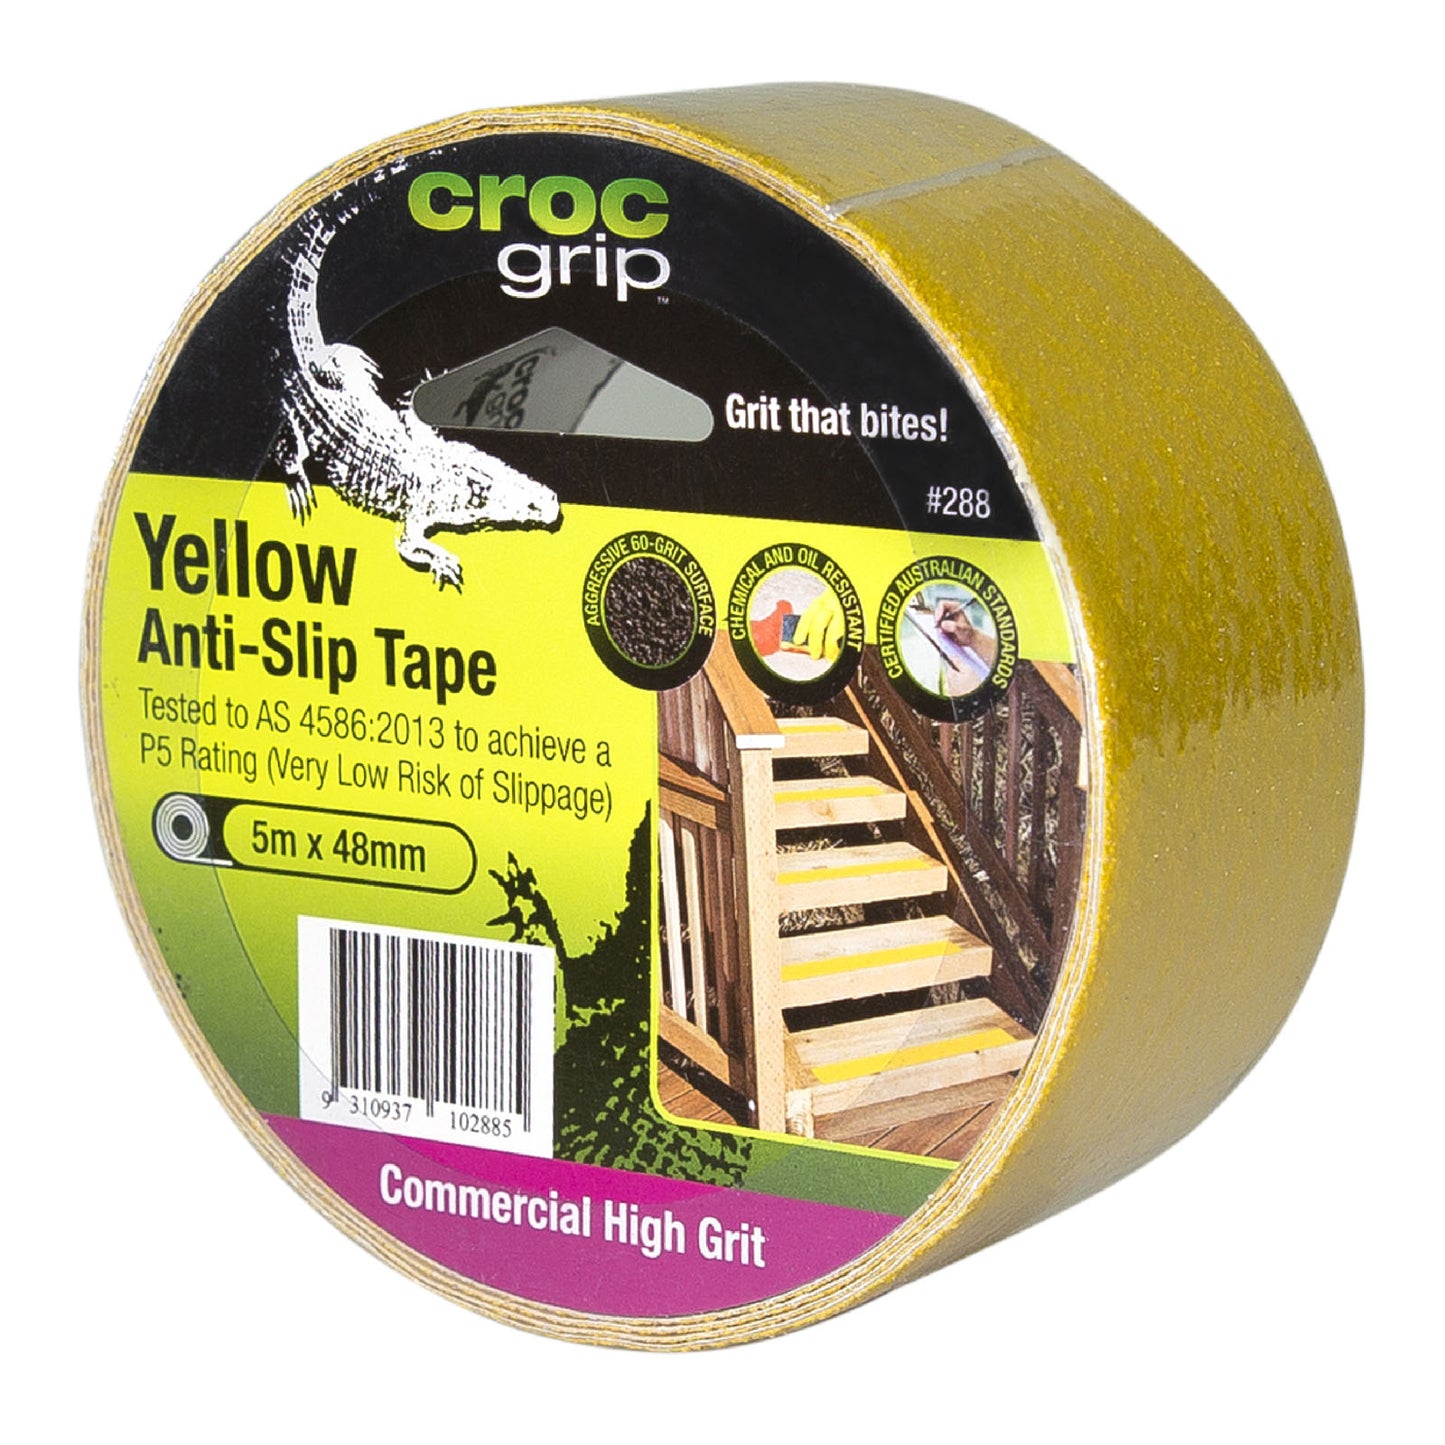 DTA Gecko Grip Anti-Slip Adhesive Tape Yellow 50mm x 20m